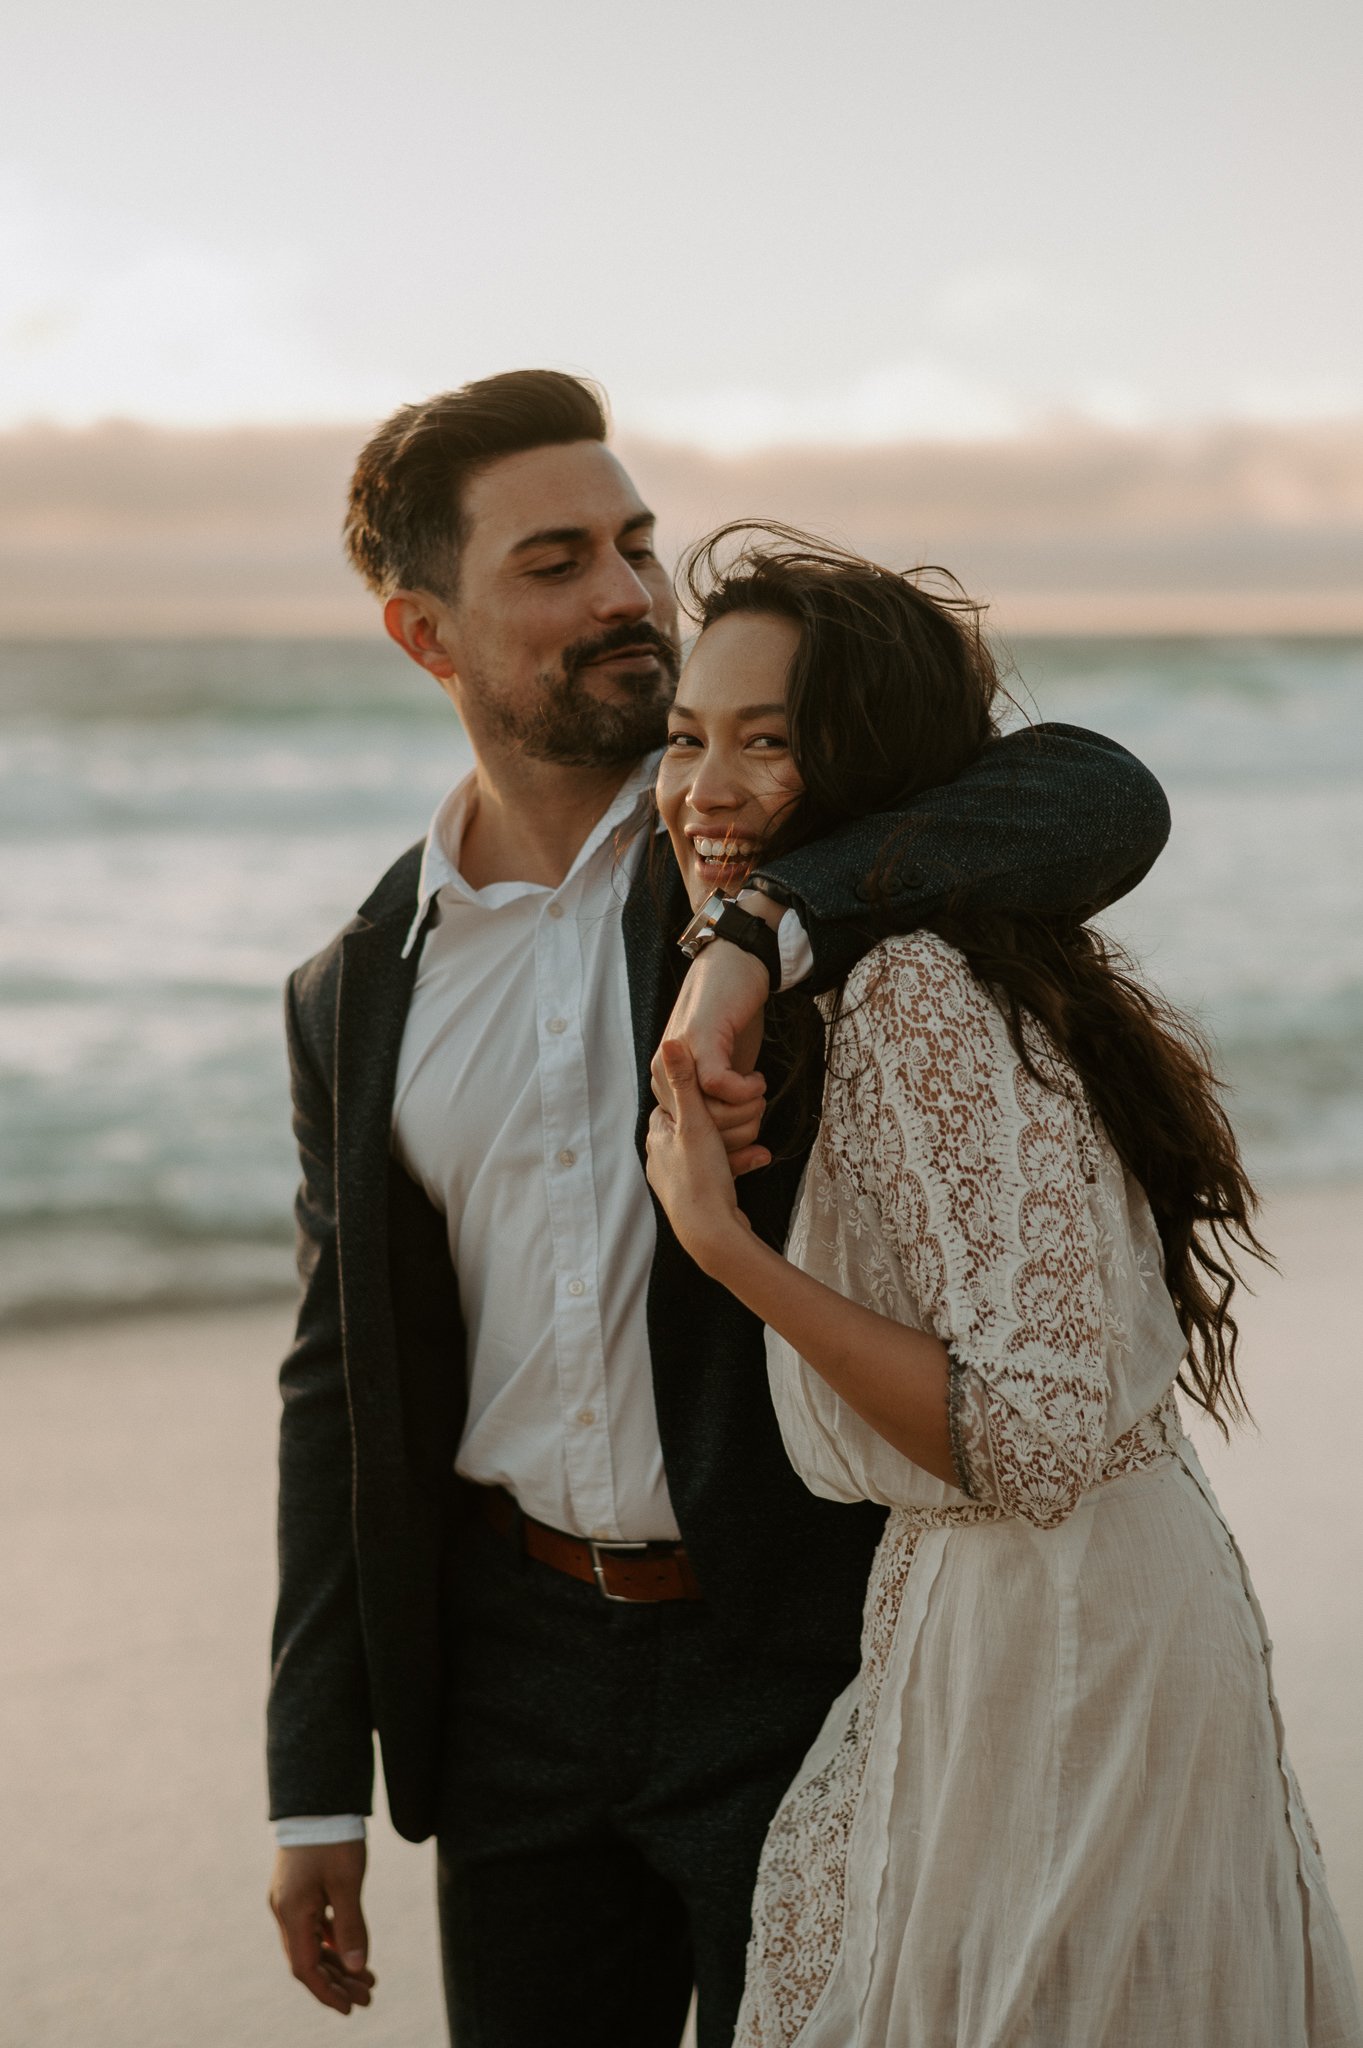 Newly engaged couple walking on beach Big Sur